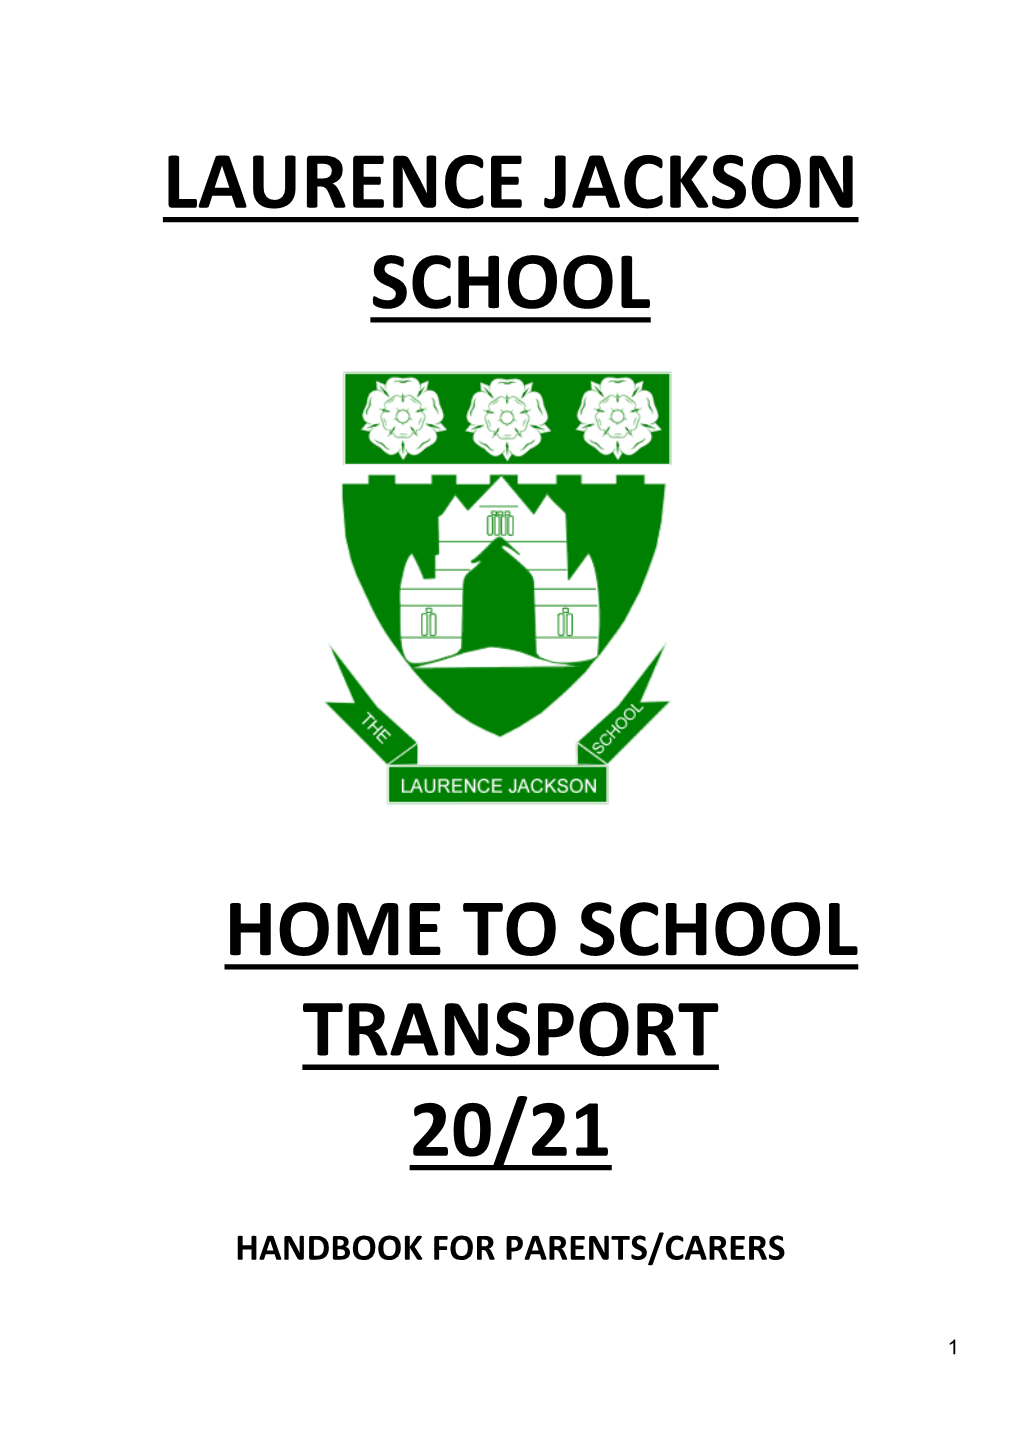 Laurence Jackson School Home to School Transport 20/21